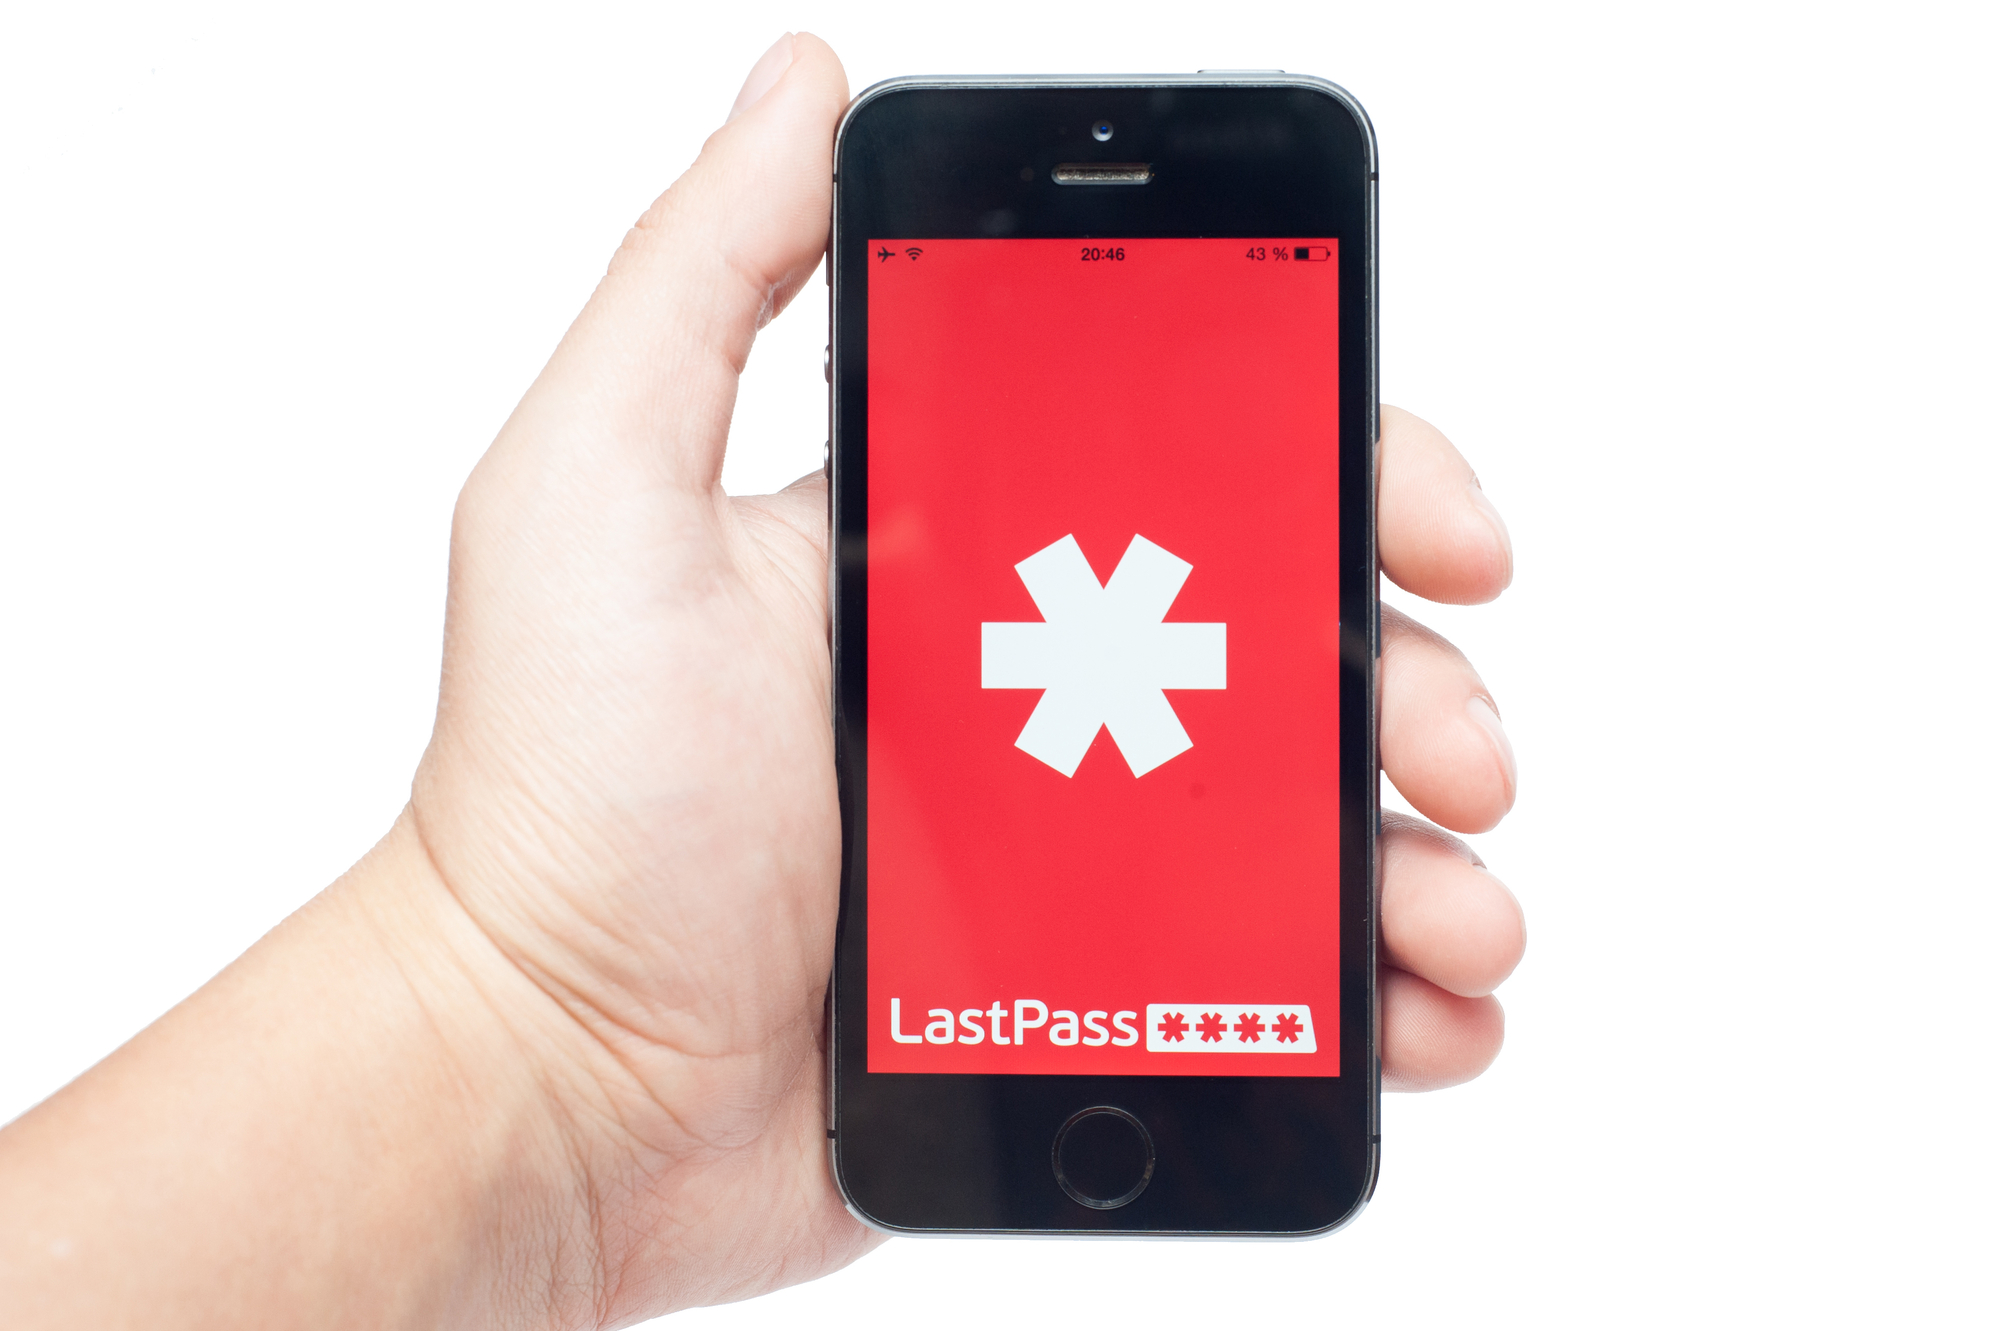 LastPass App